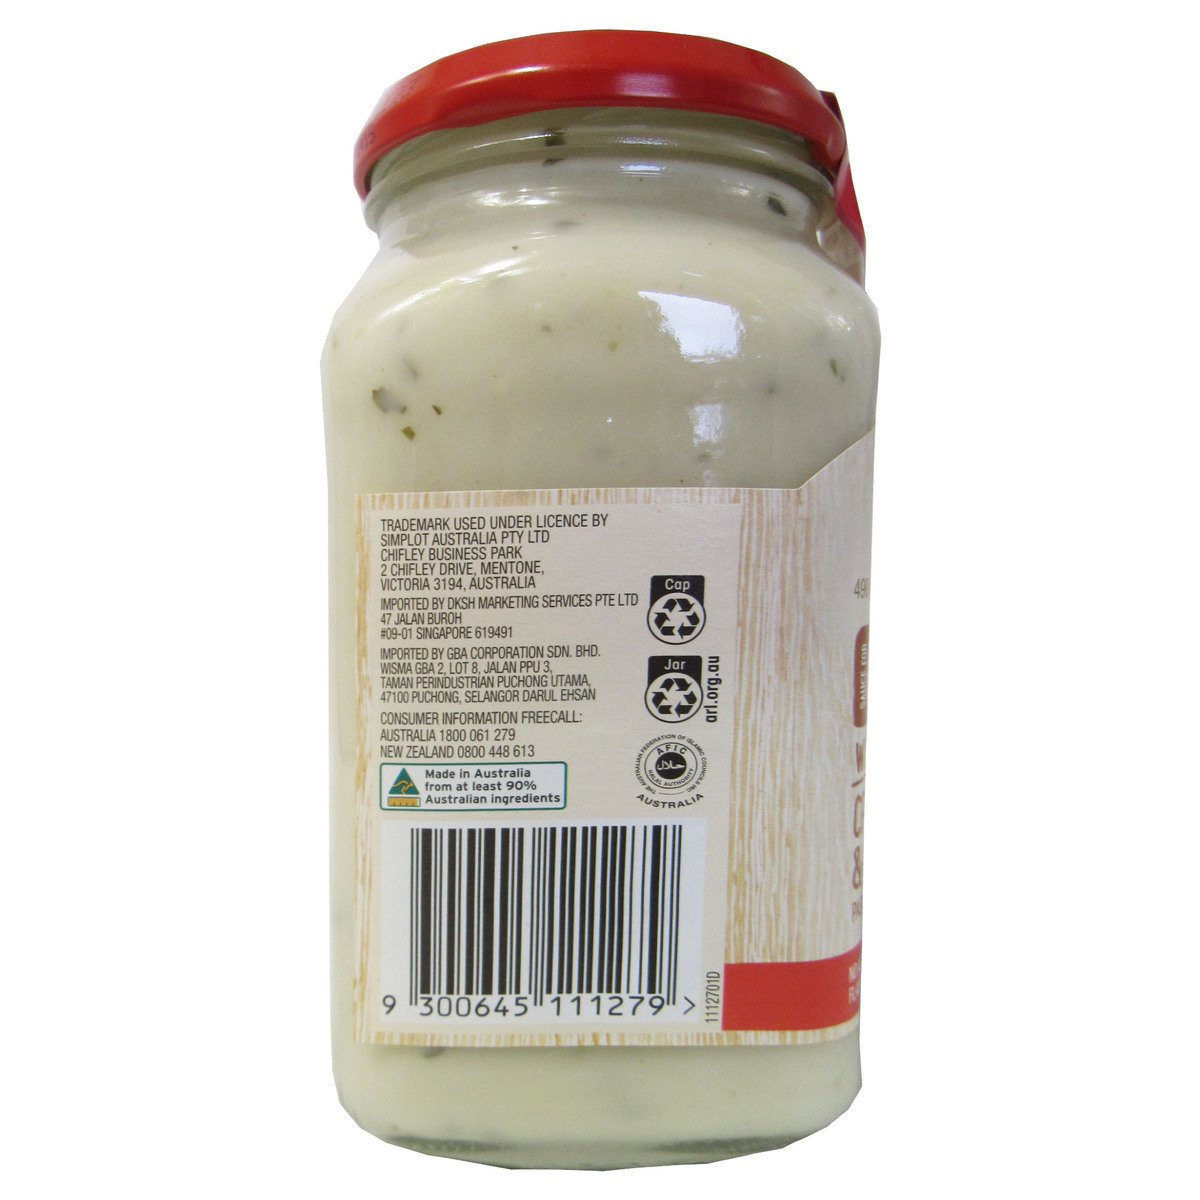 Leggo's Pasta Sauce Carbonara With Fresh Cream Cheese & Onion 490 g